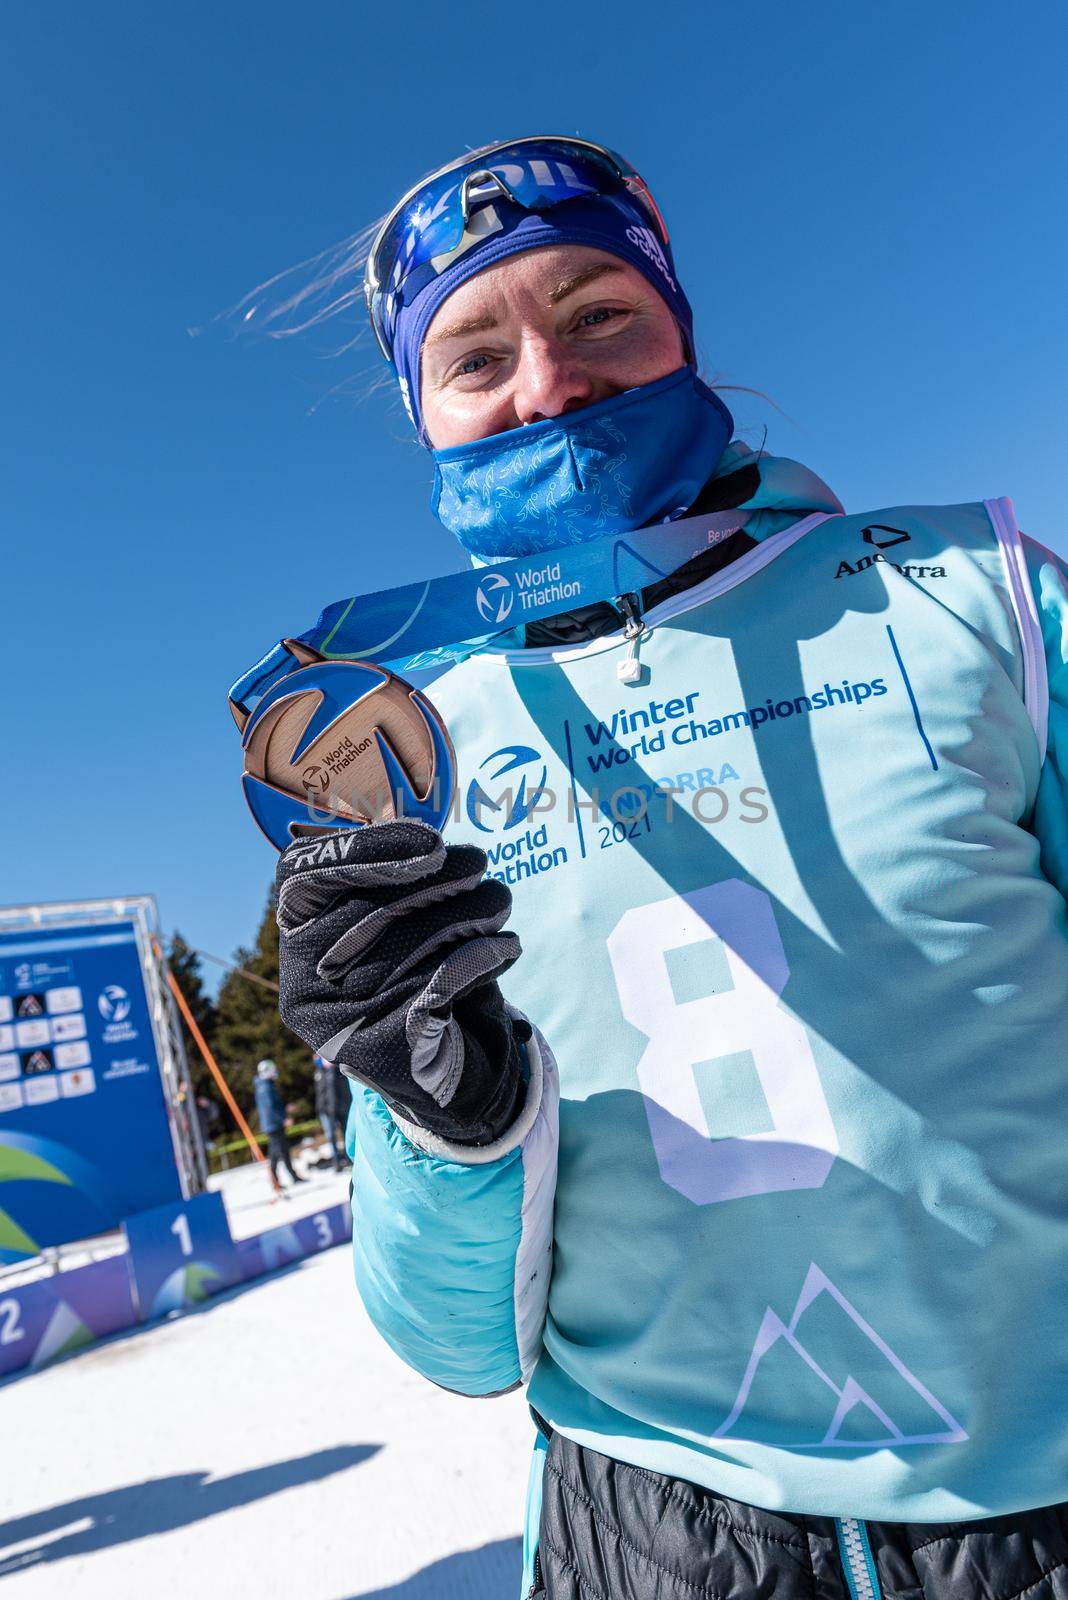 Franco Pesavento ITA in the 2021 World Triathlon Winter Championships Andorra  by martinscphoto